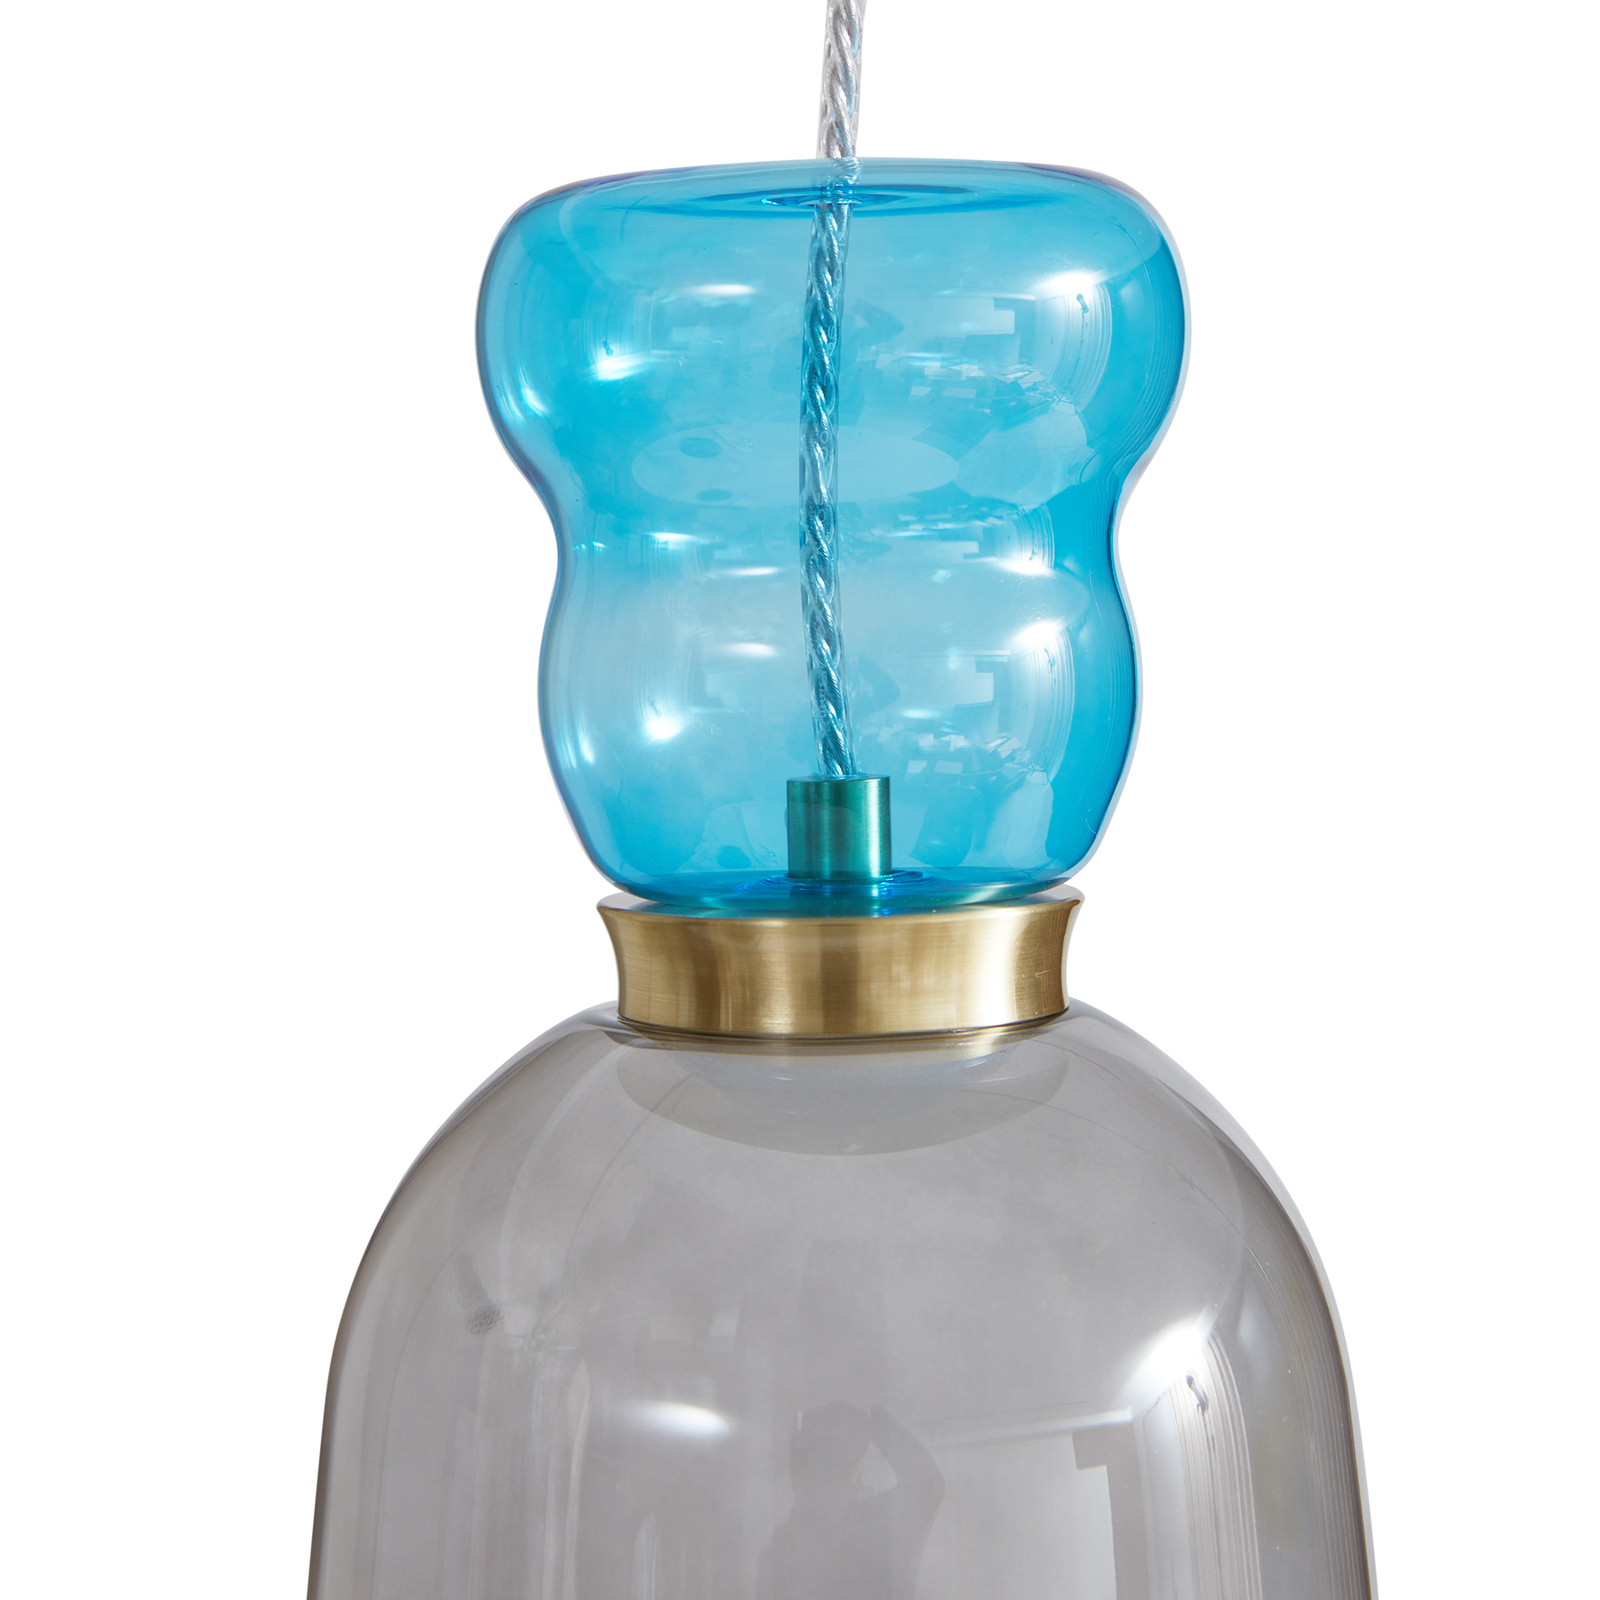 Lucande LED-Hängelampe Fay, hellgrau/hellblau, Glas, Ø 15 cm